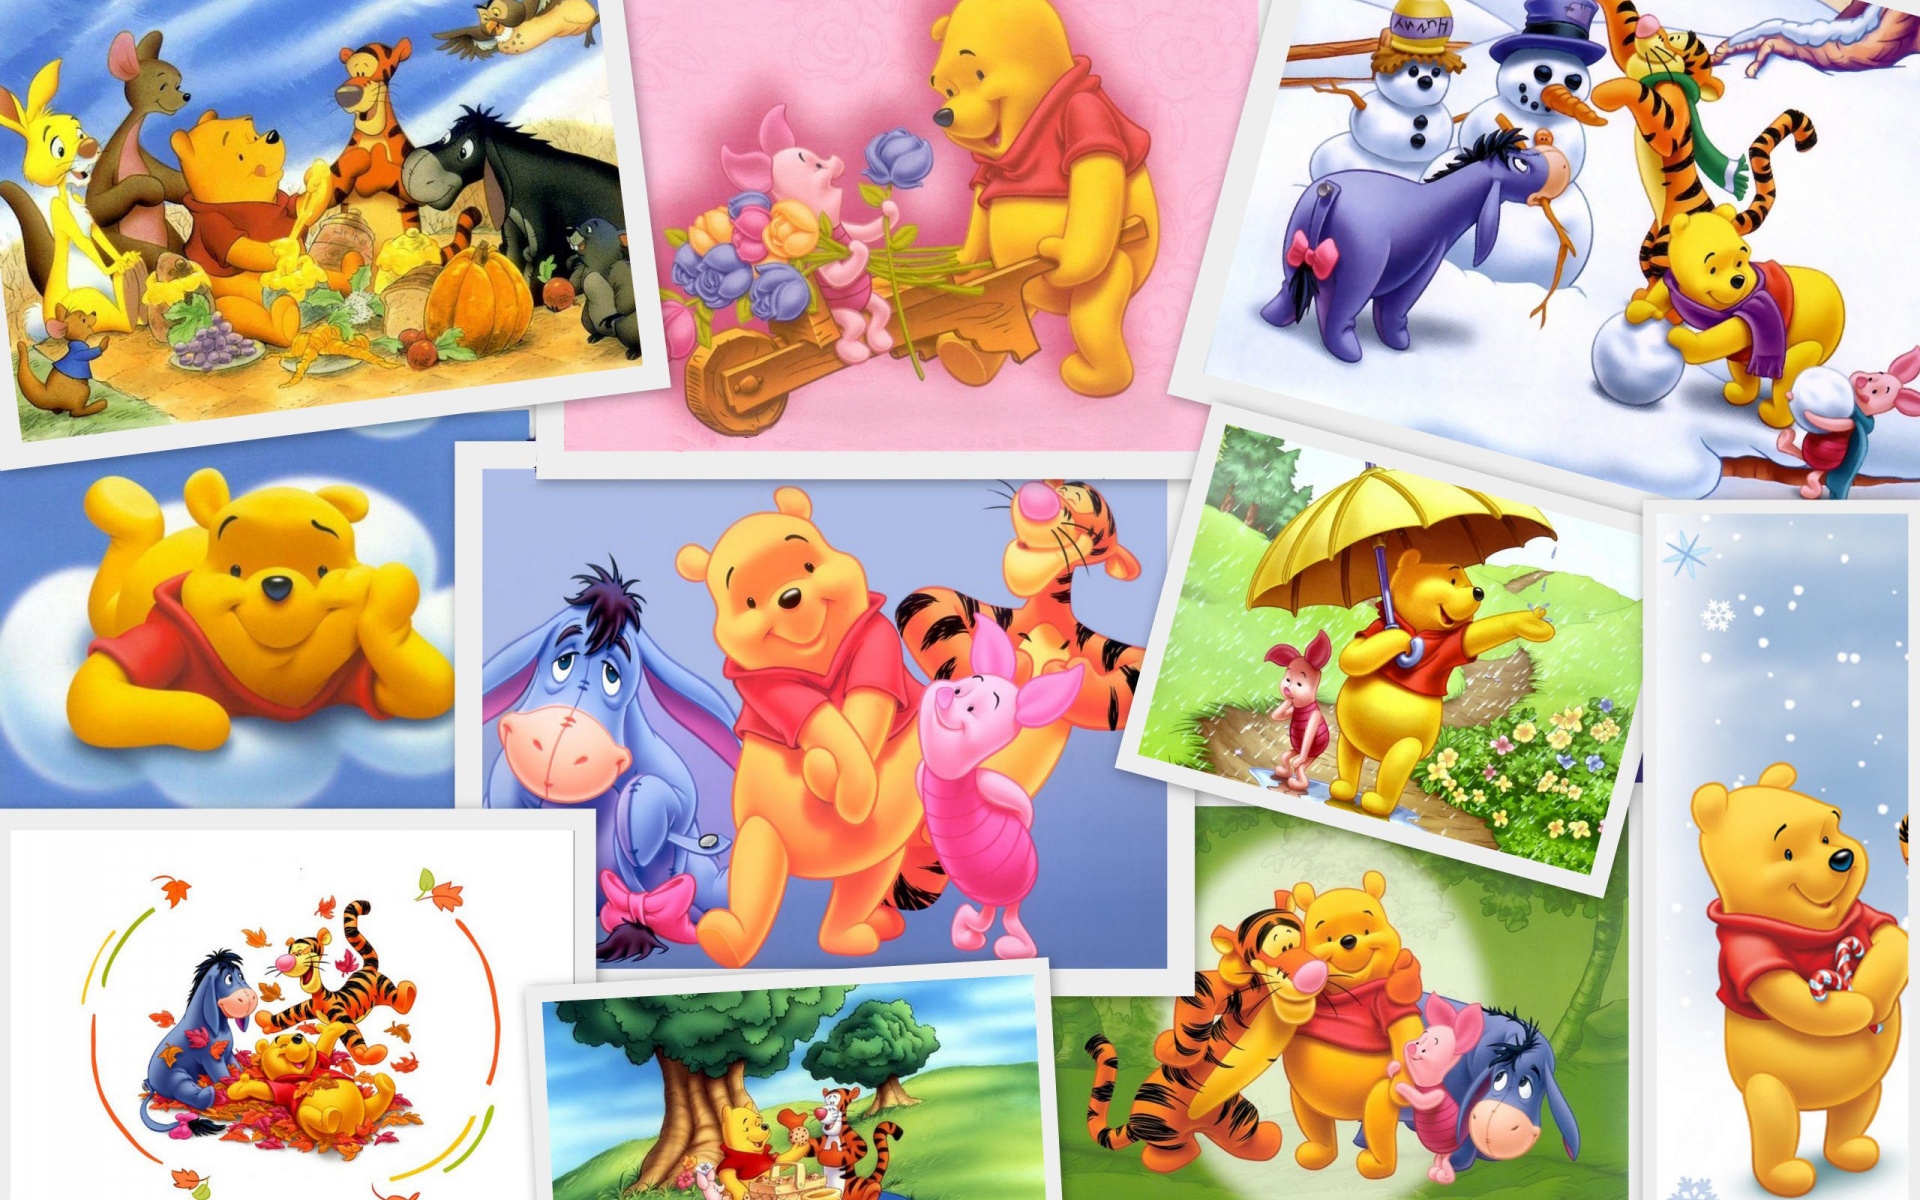 eeyore (winnie the pooh), winnie the pooh, roo (winnie the pooh), kanga, tv show, tiger (winnie the pooh)